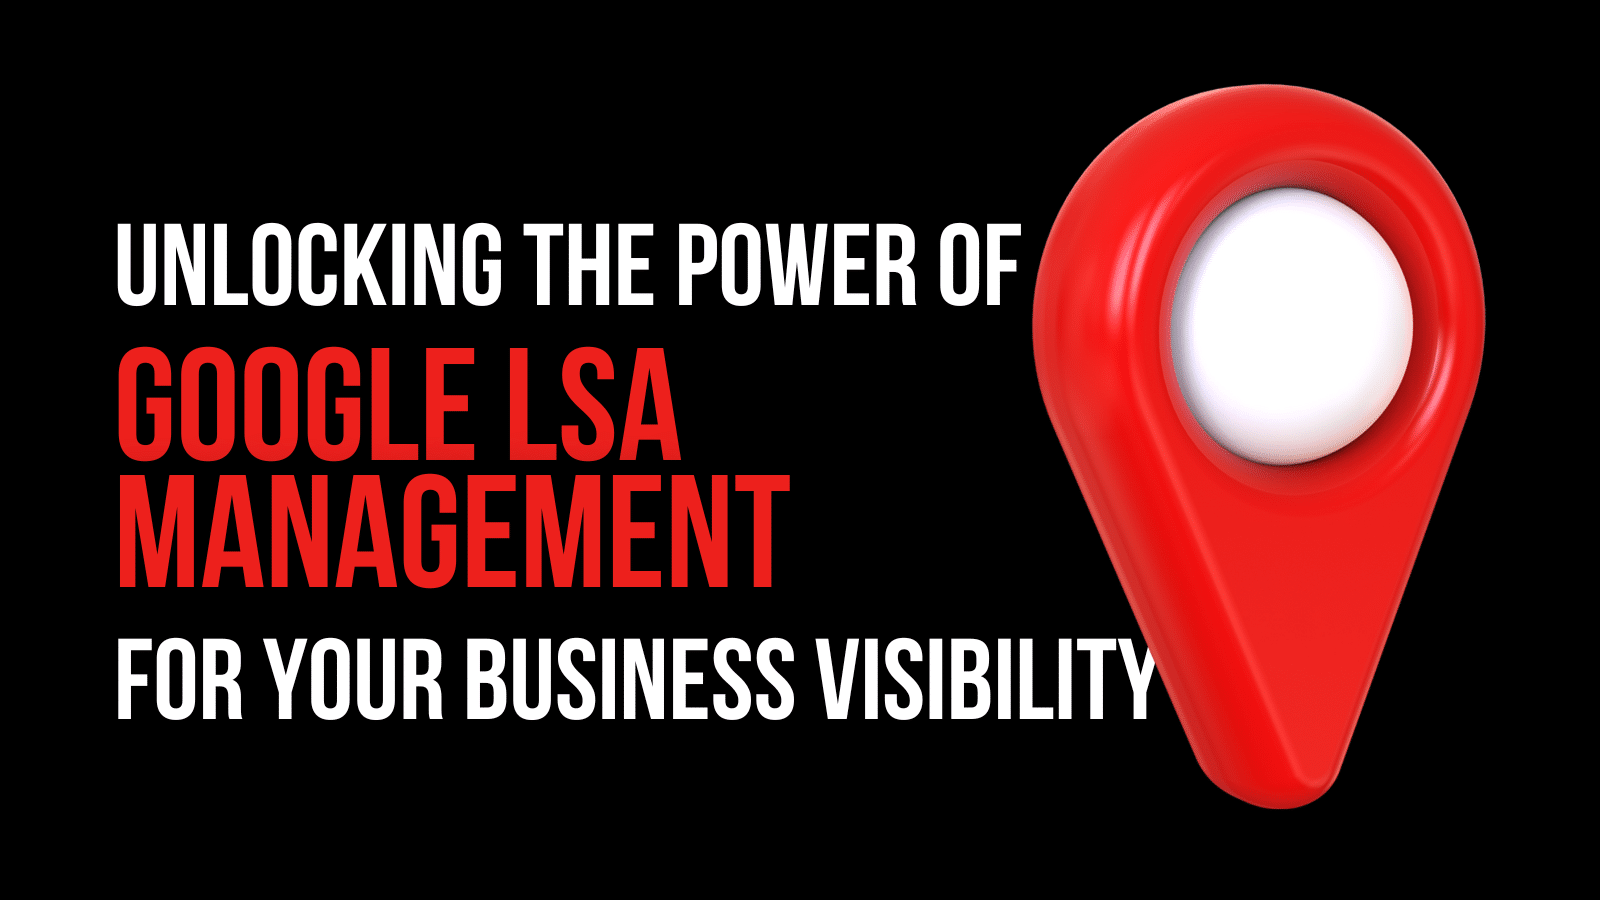 Blog Post One Source Branding Media 10 Google LSA Management